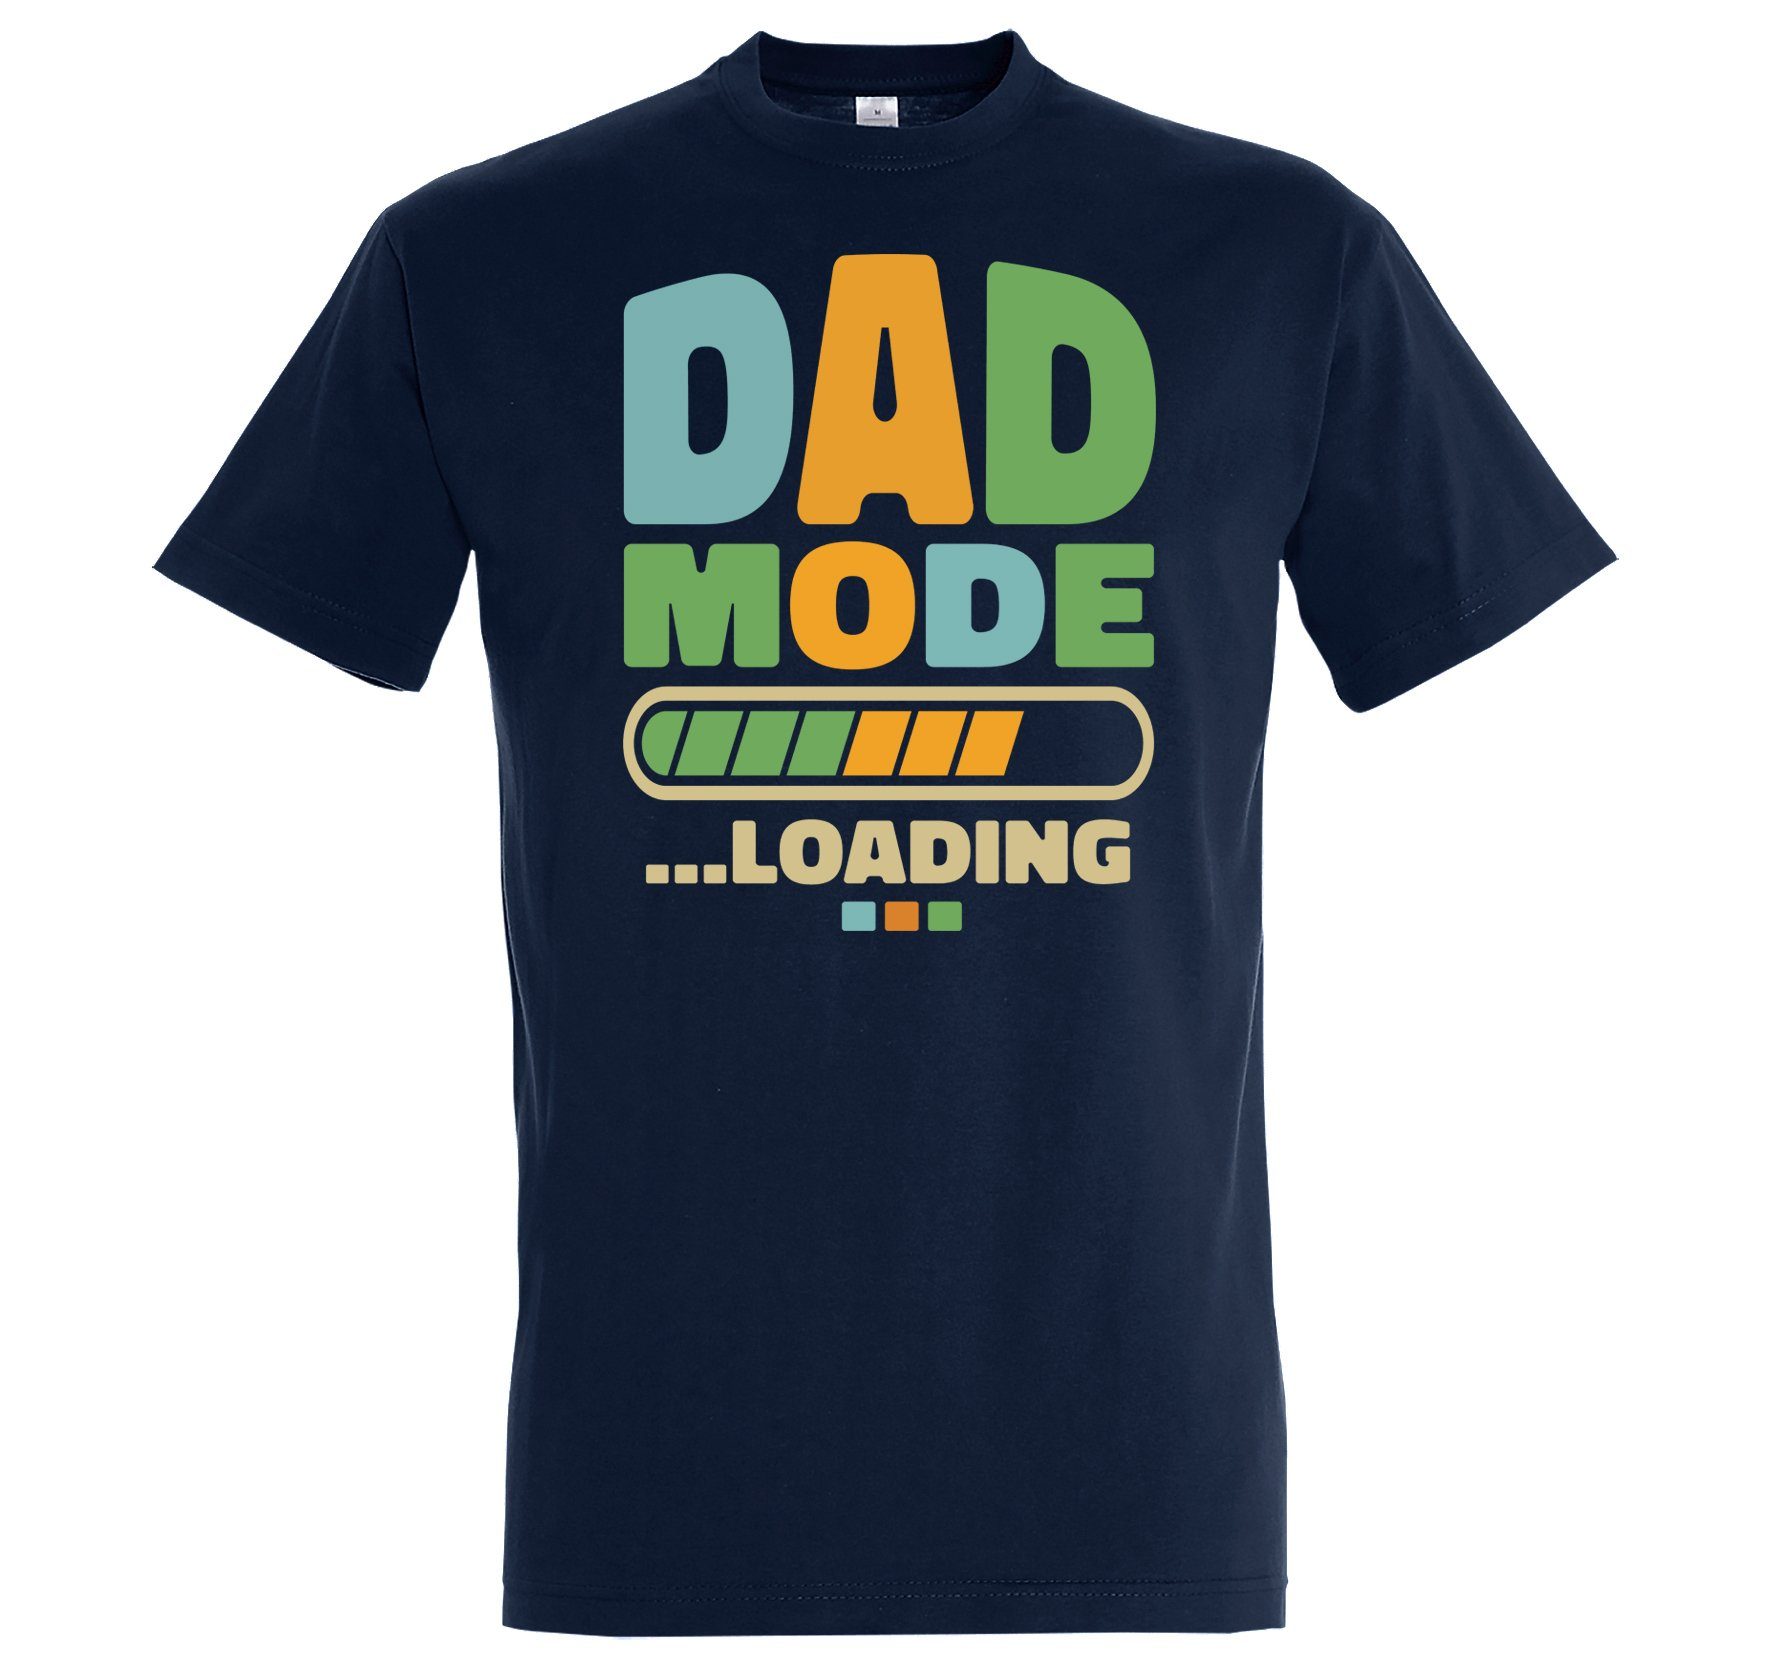 Designz T-Shirt Loading Fun-Look Youth im DAD Shirt Navy Mode Herren